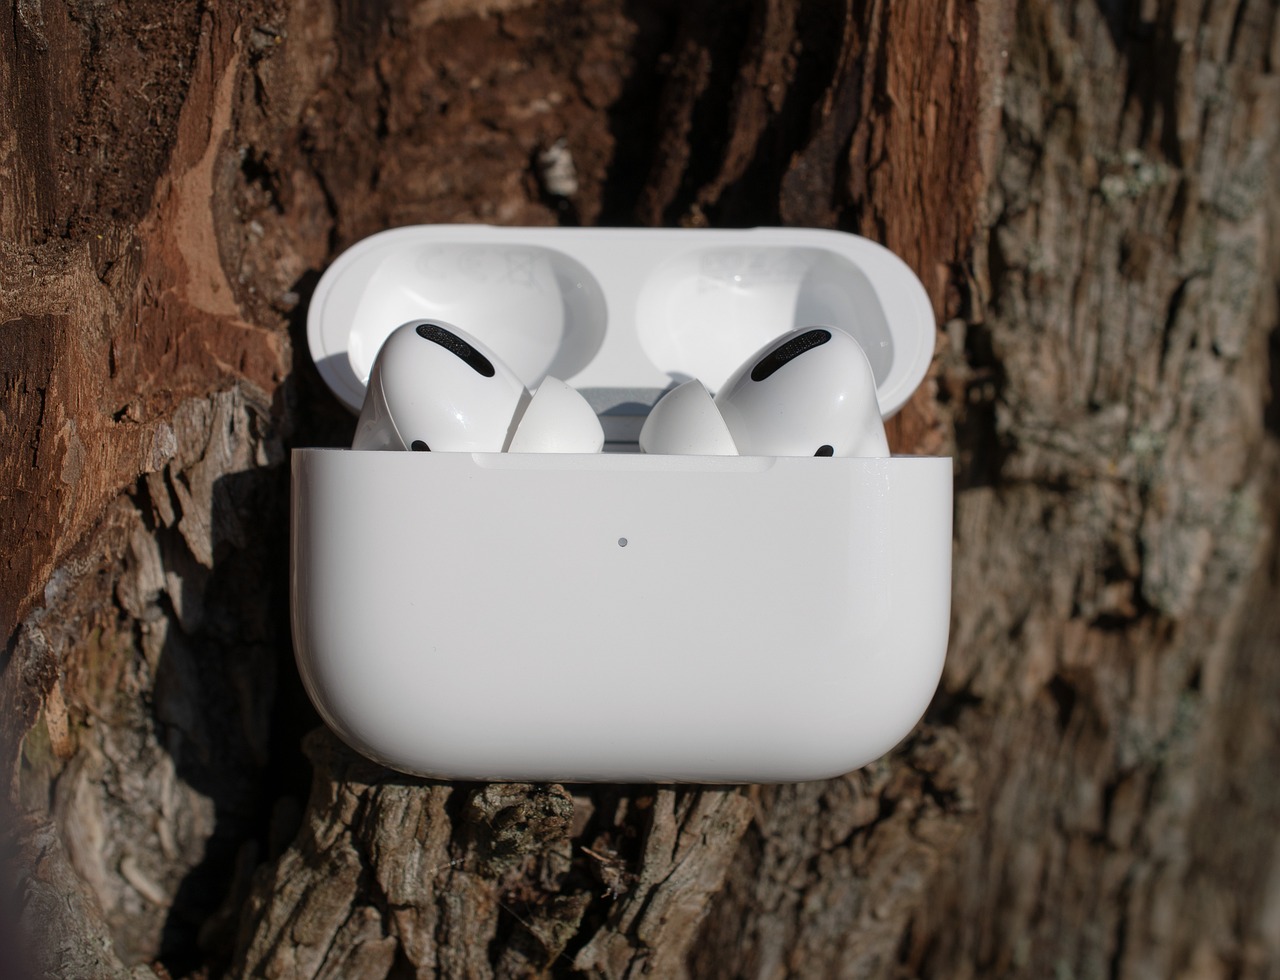 iPhone Mengupgrade AirPods Pro dengan Charging Case USB-C